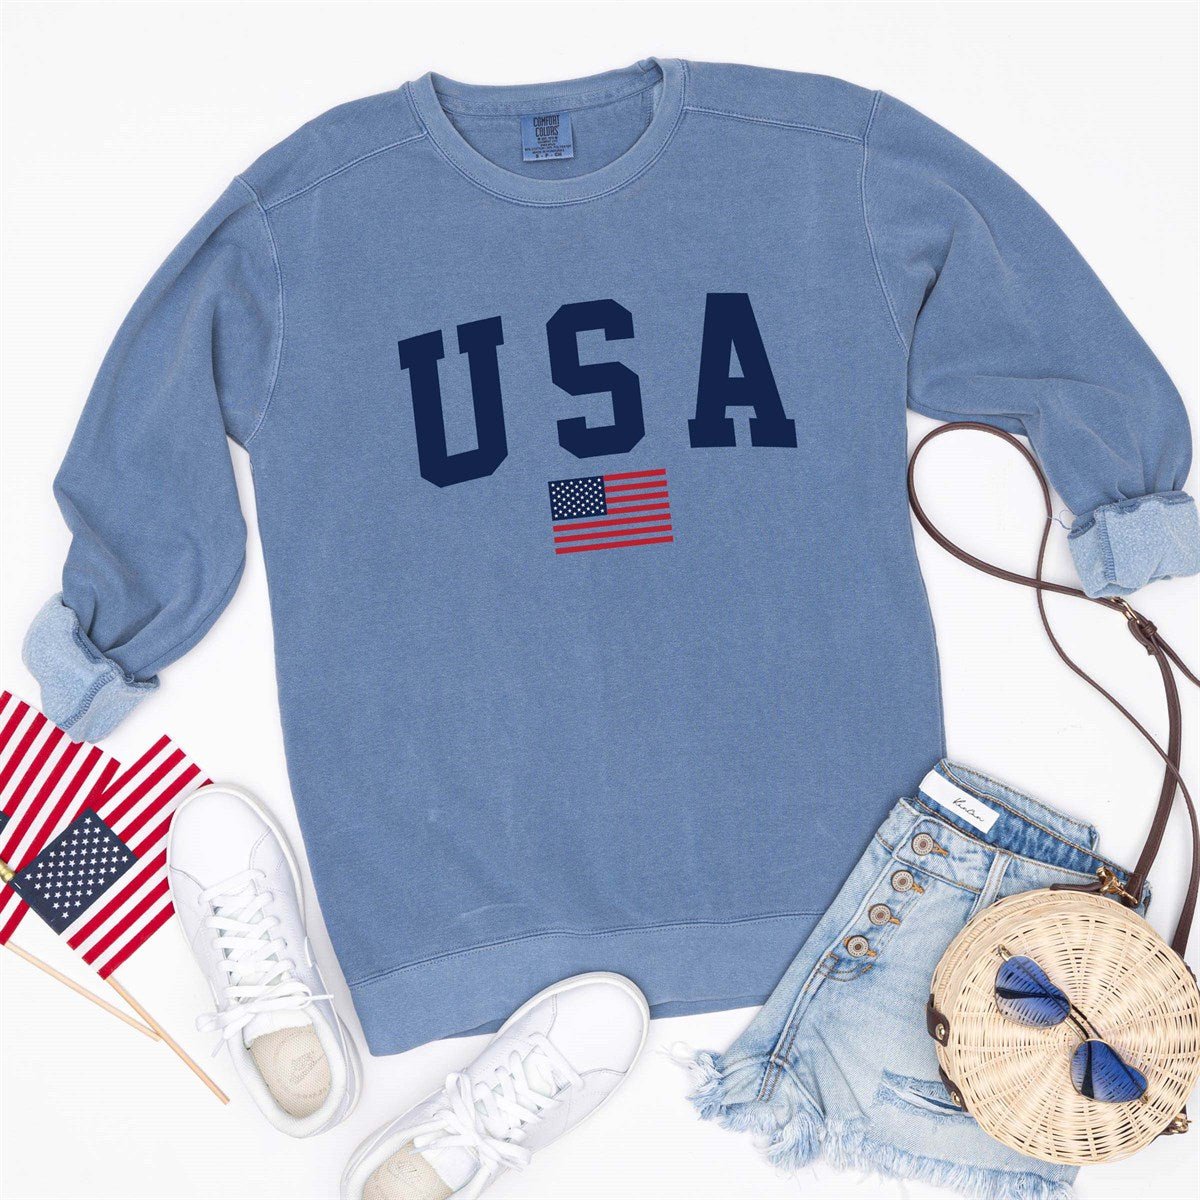 USA Comfort Colors Crew Sweatshirt - Limeberry Designs